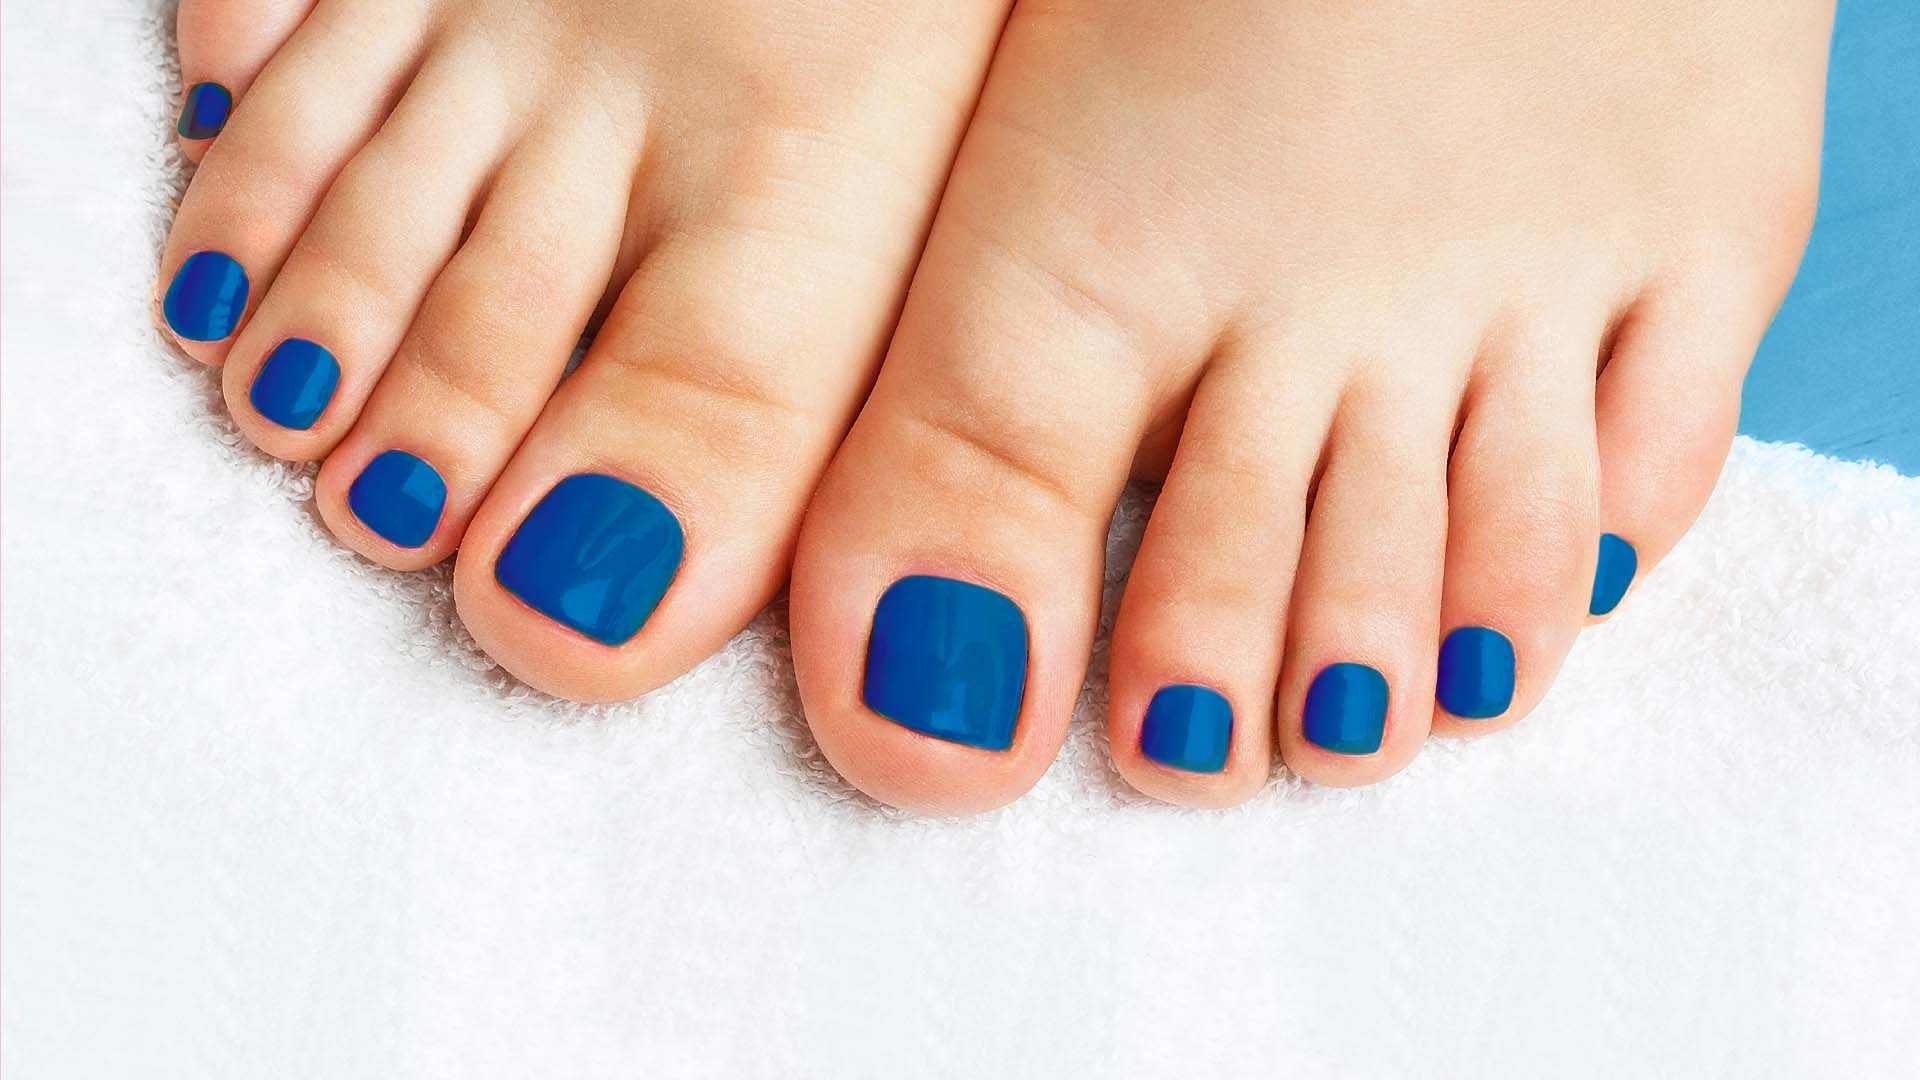 Khalifa nails - New leg gel polish design | Facebook